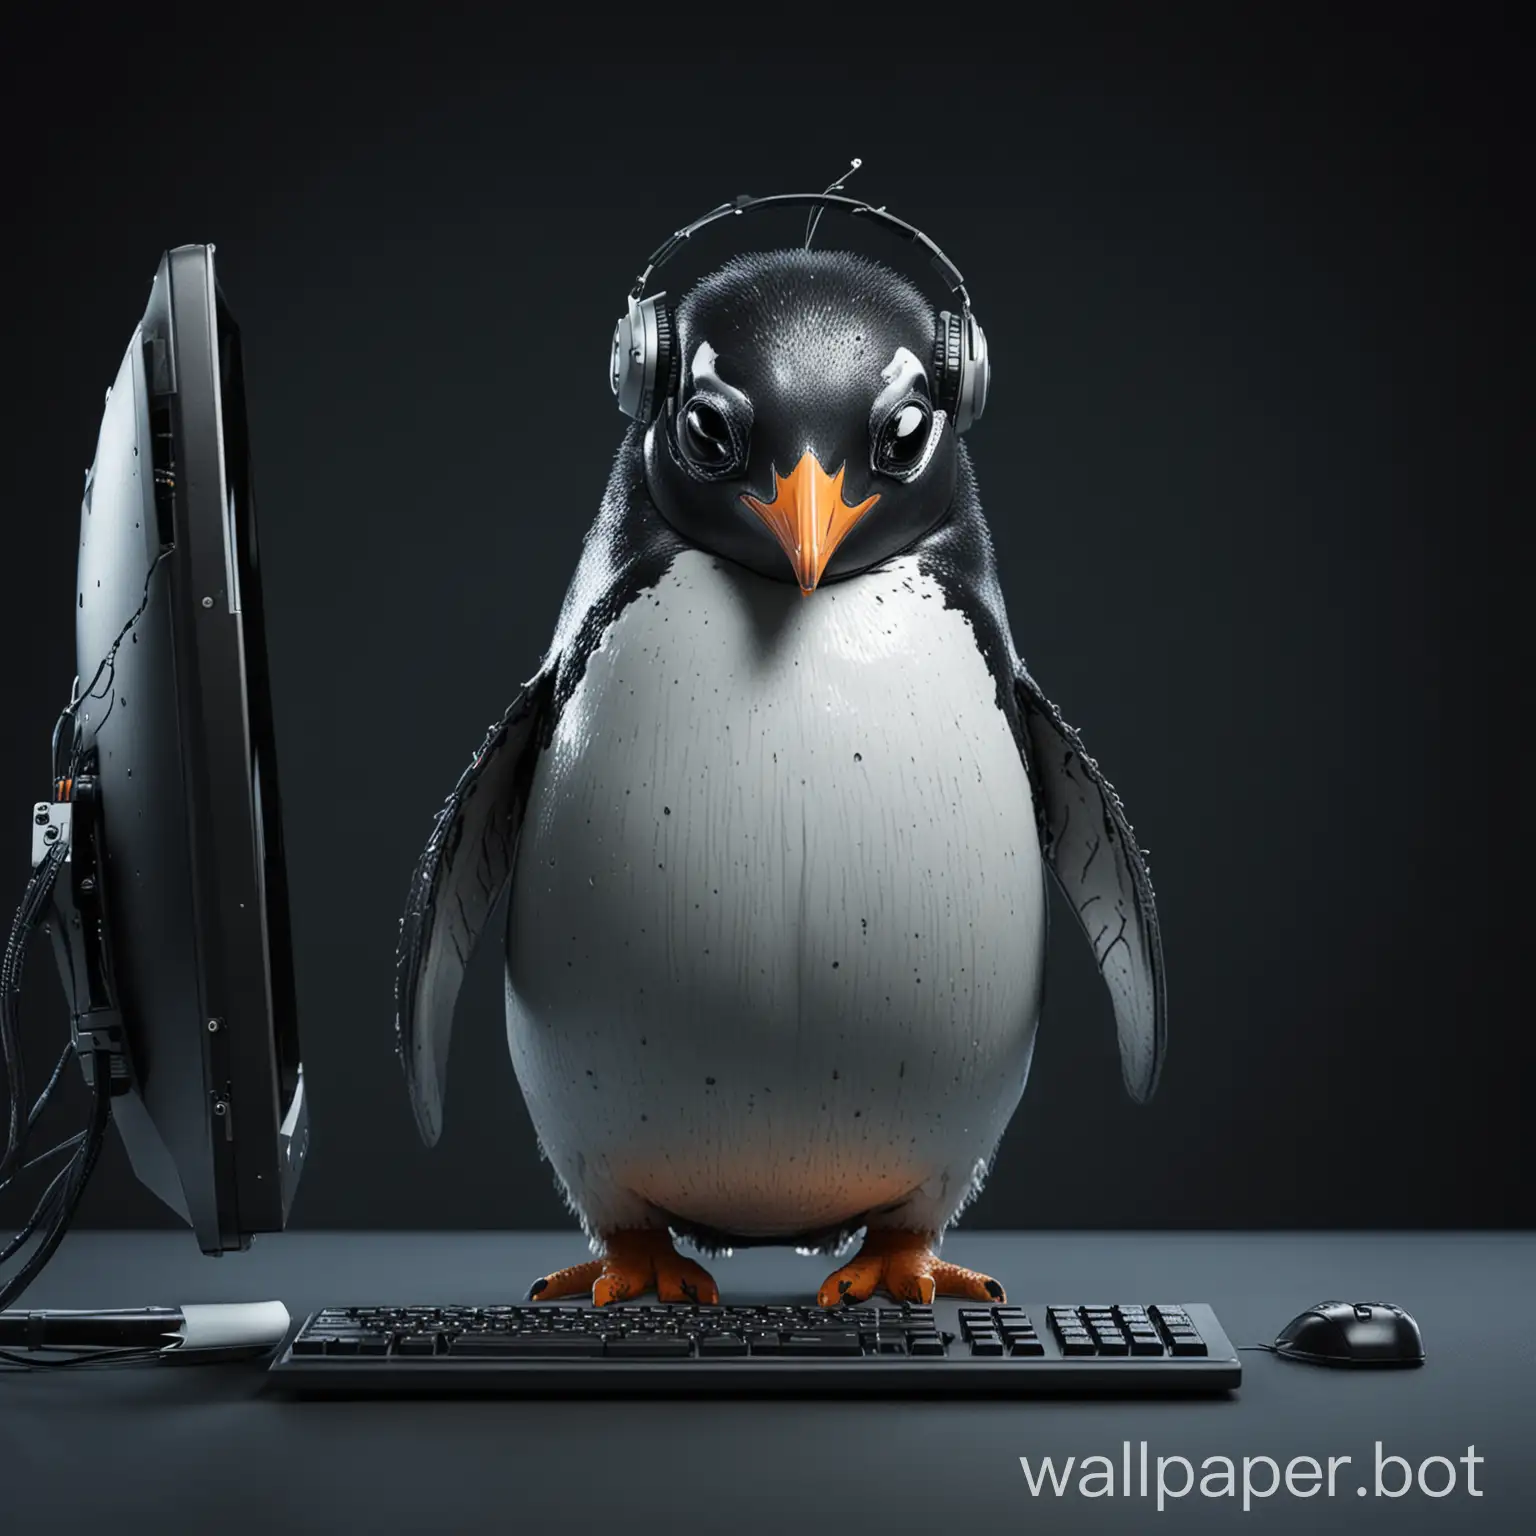 Cyborg-Penguin-Working-on-Computer-in-Dark-Environment